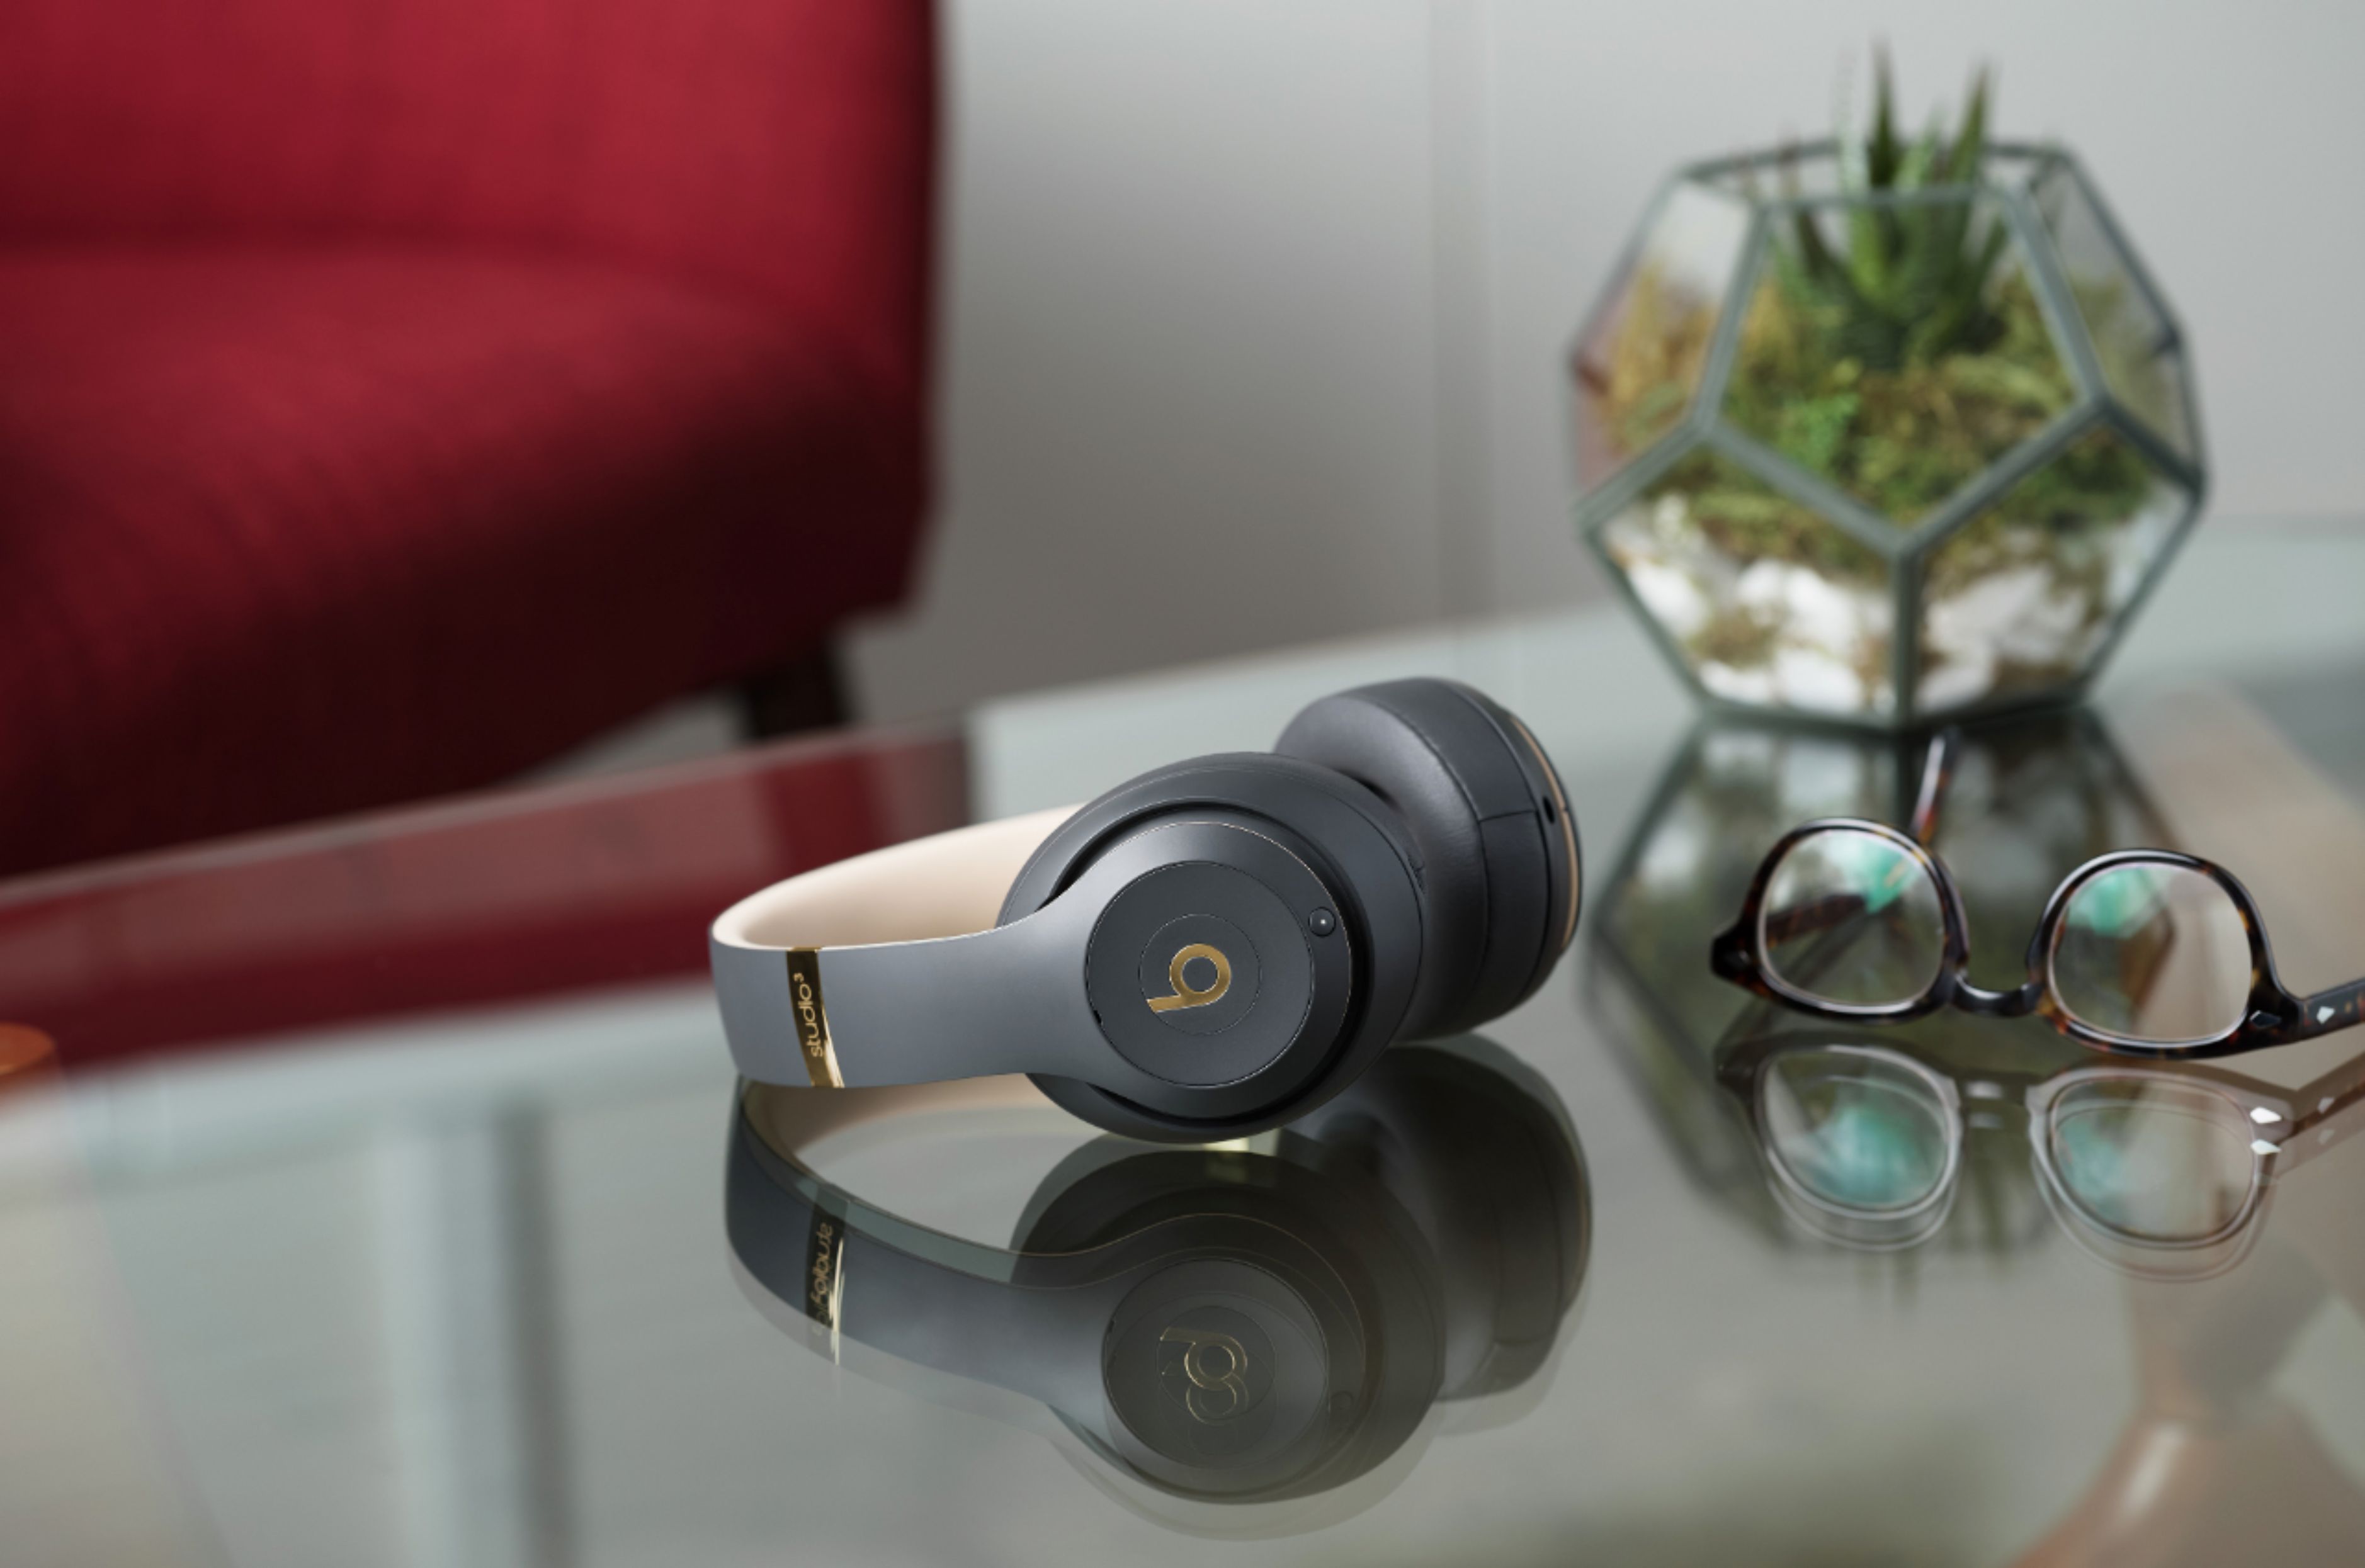 Beats Studio3 Wireless Noise Cancelling Over-Ear Headphones 